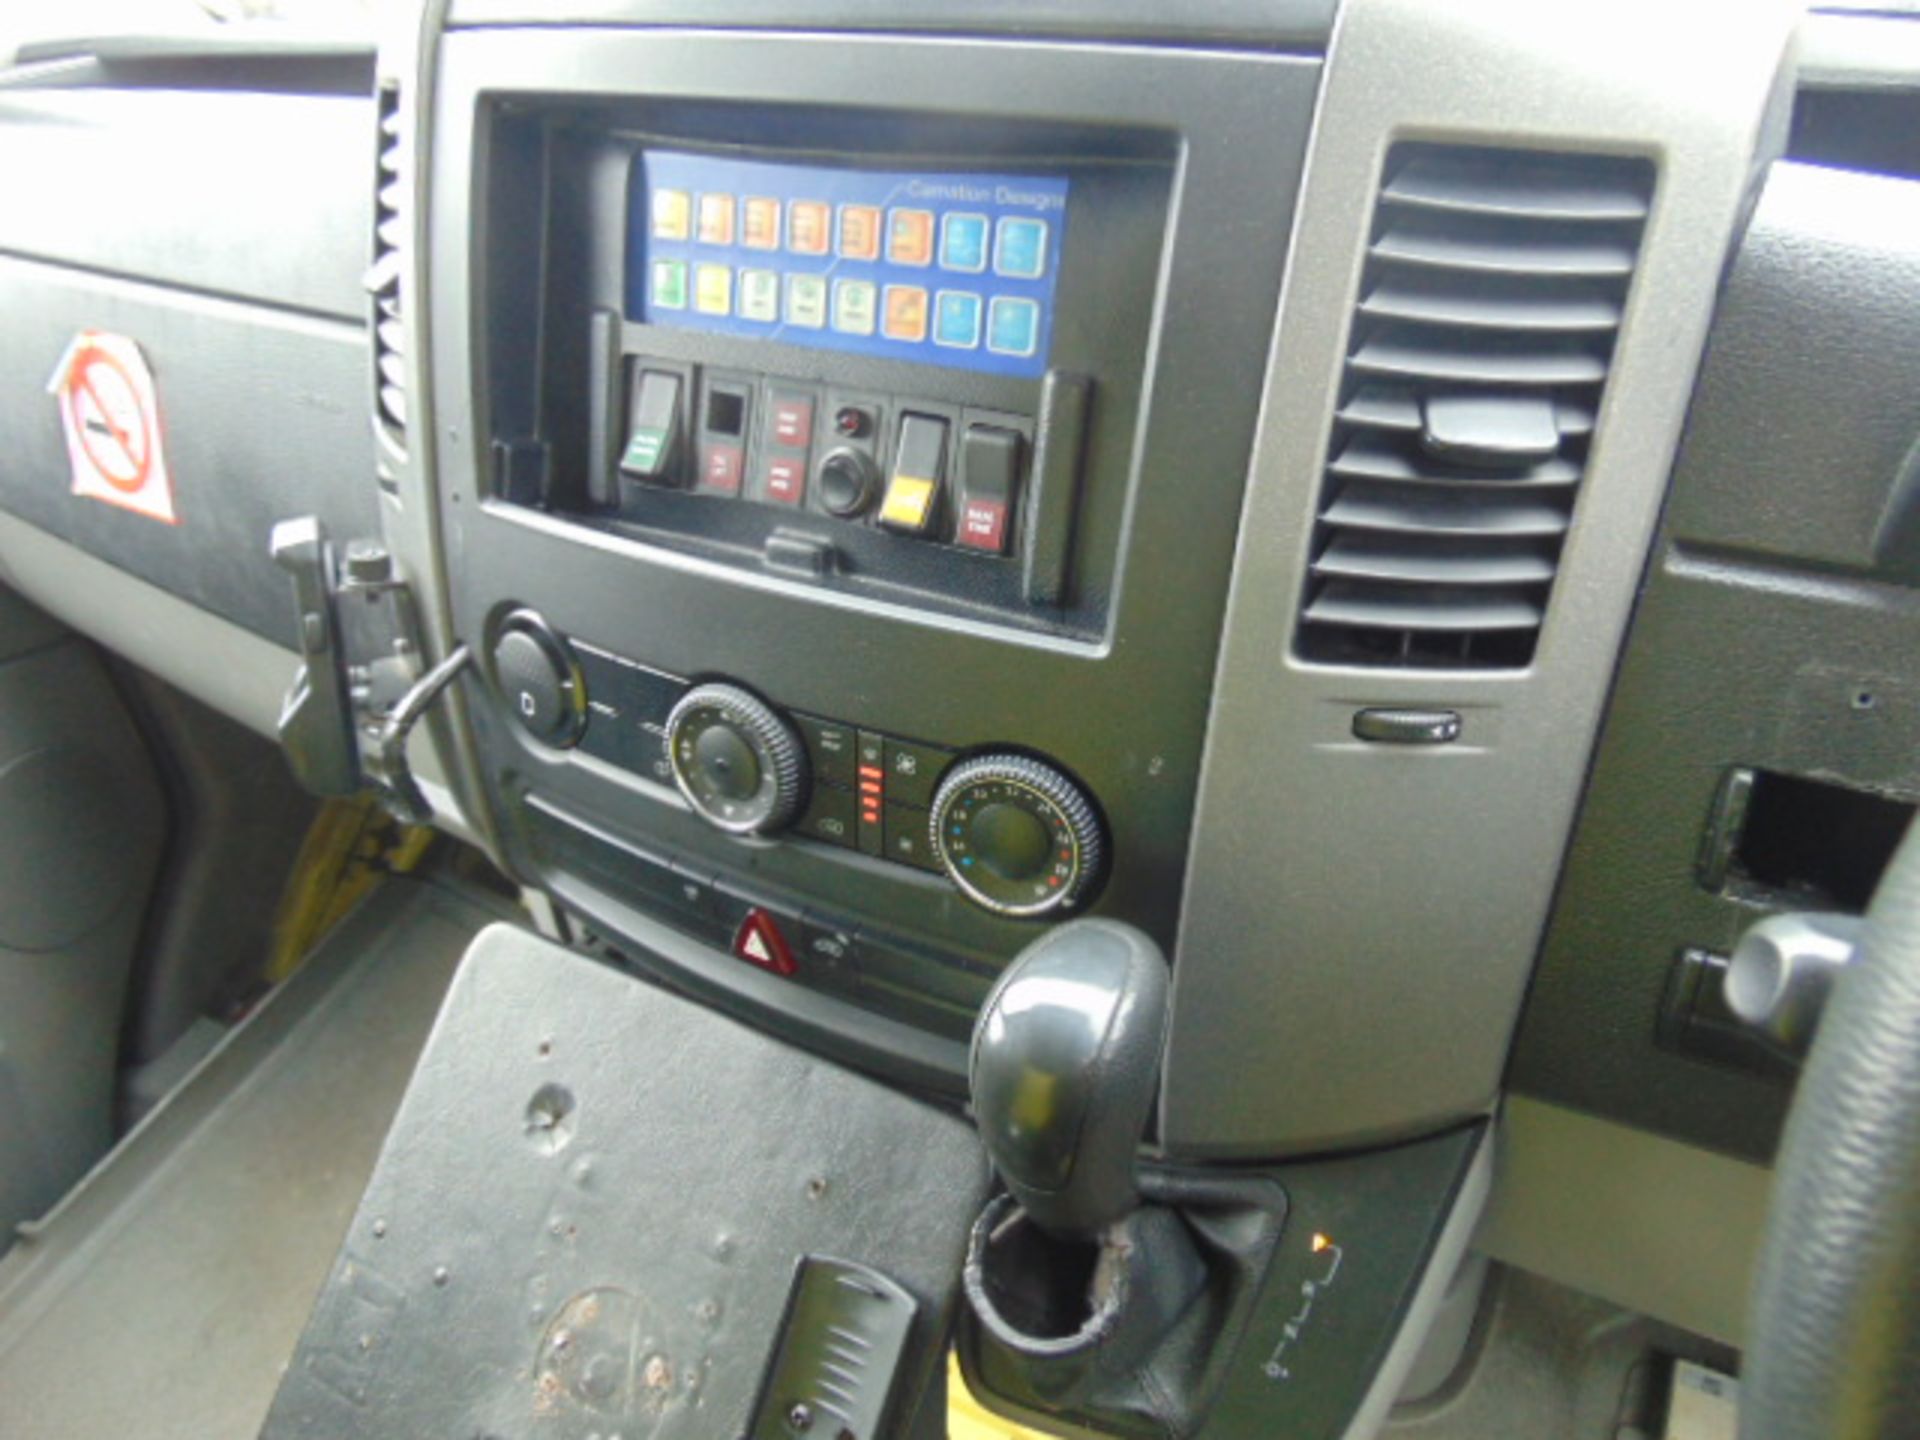 Mercedes Sprinter 515 CDI Turbo diesel ambulance - Image 11 of 18